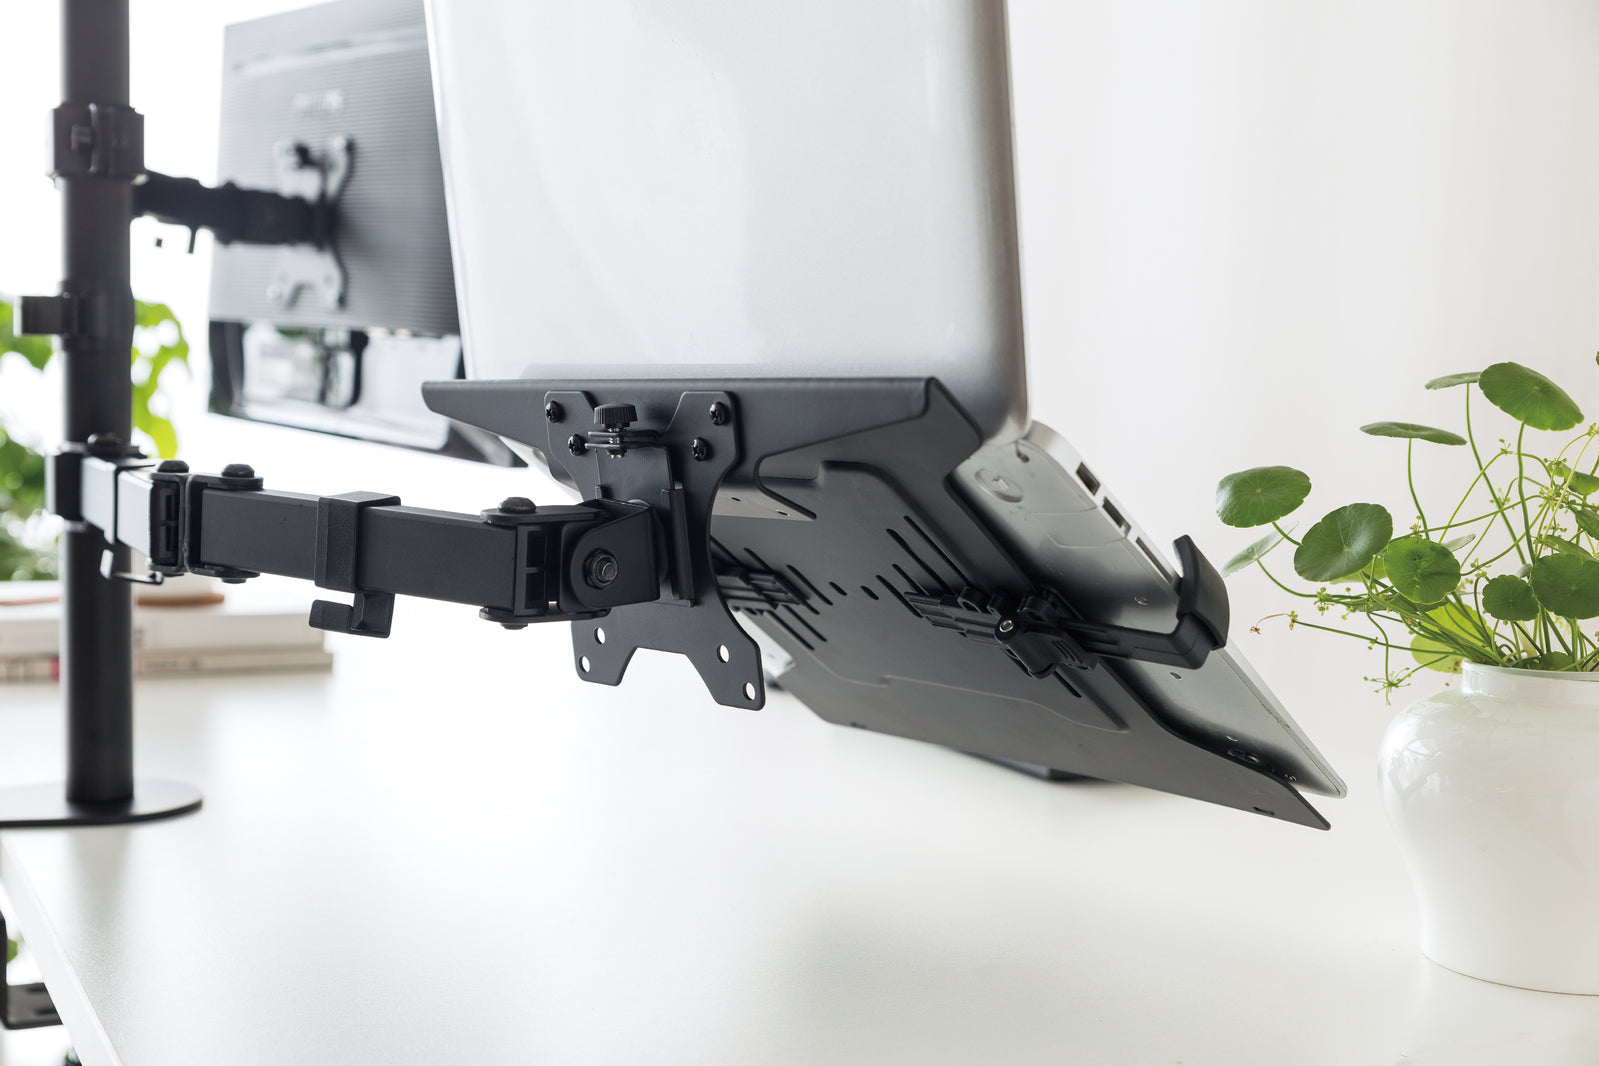 Black Steel Laptop Holder for Monitor Arm fits 75 x 75, 100 x 100 VESA Plate